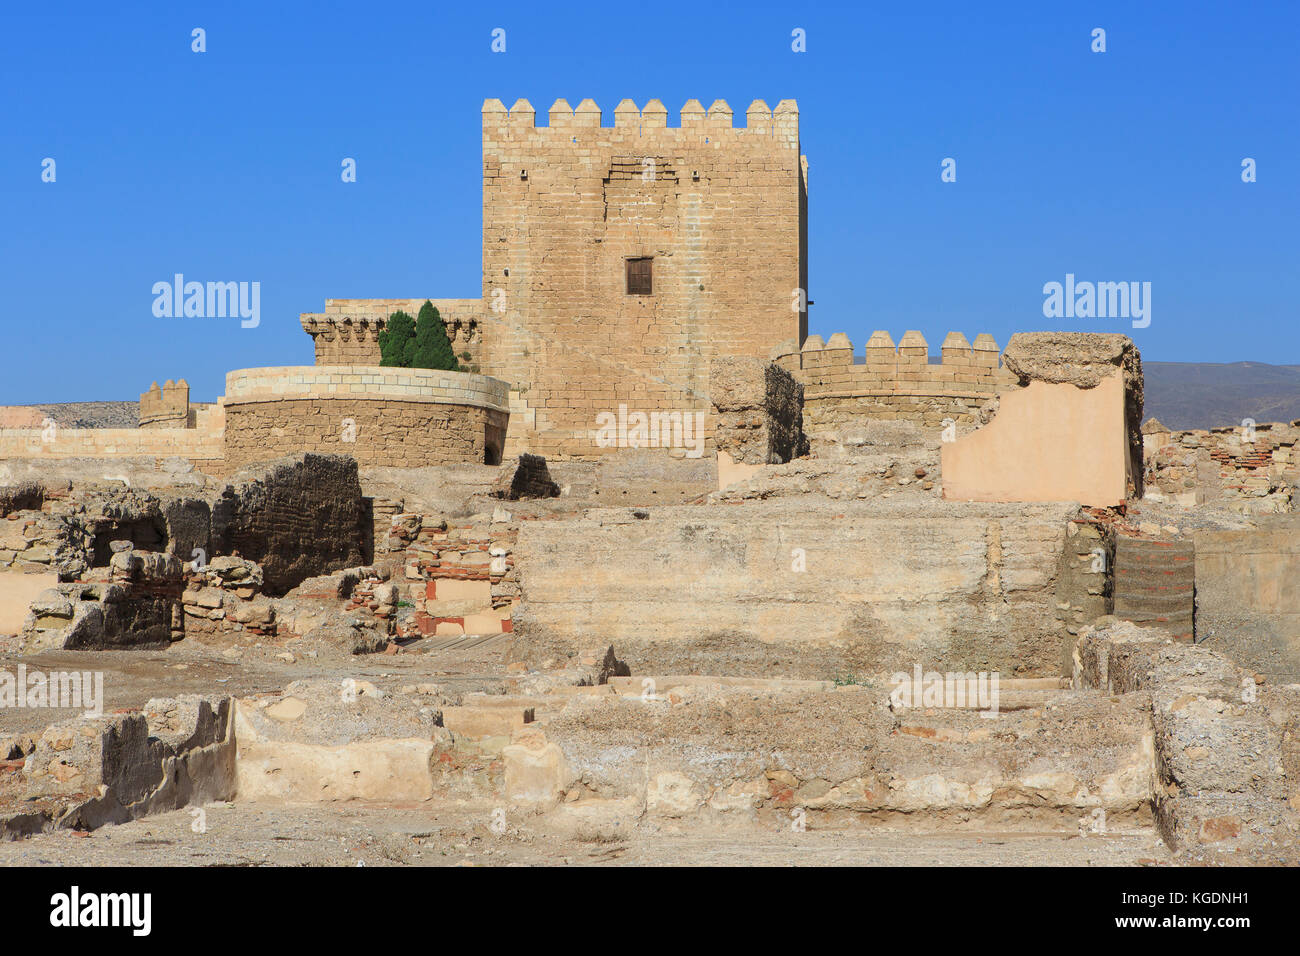 The keep of the Alcazaba (citadel) in Almeria, Spain Stock Photo